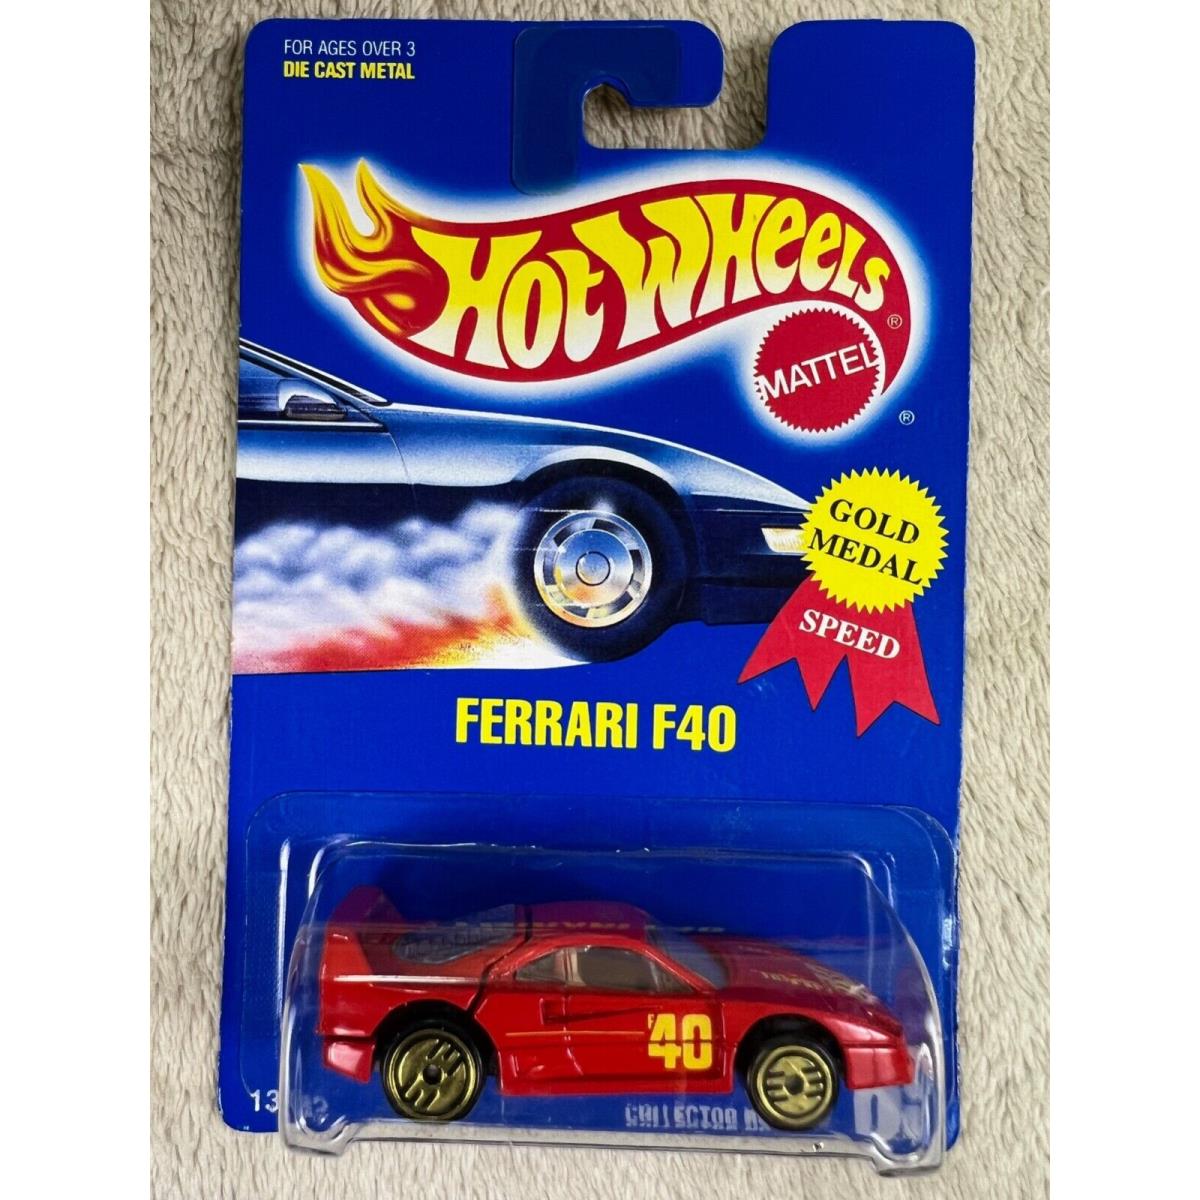 1991 Hot Wheels Ferrari F40 Red 69 Gold Medal Speed HW16